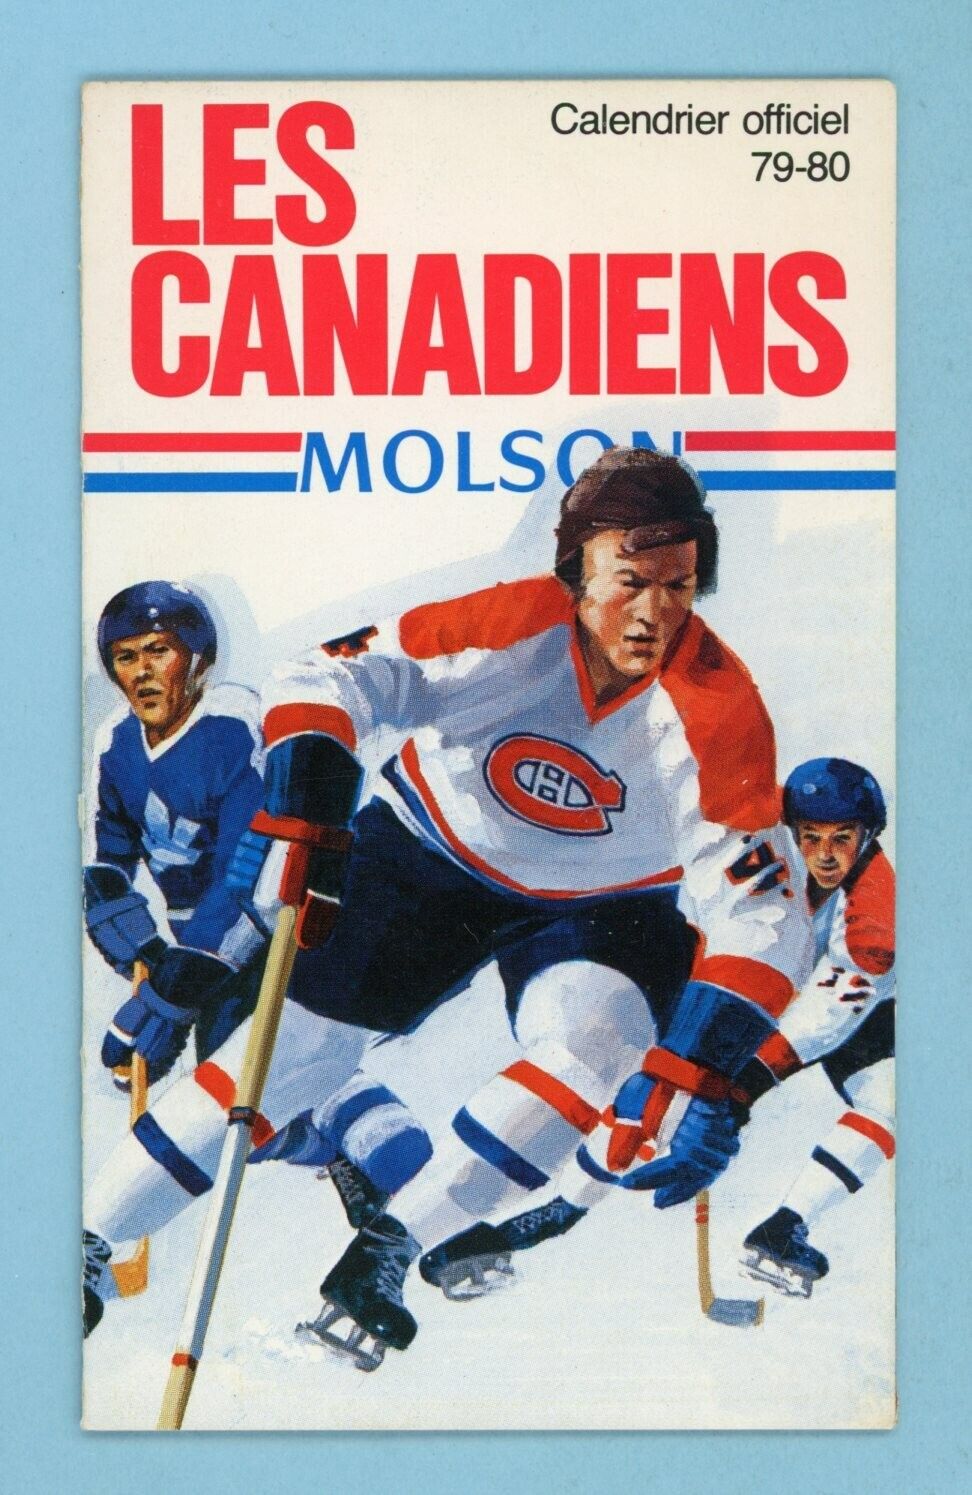 1979-80 Montreal Canadiens Pocket Schedule